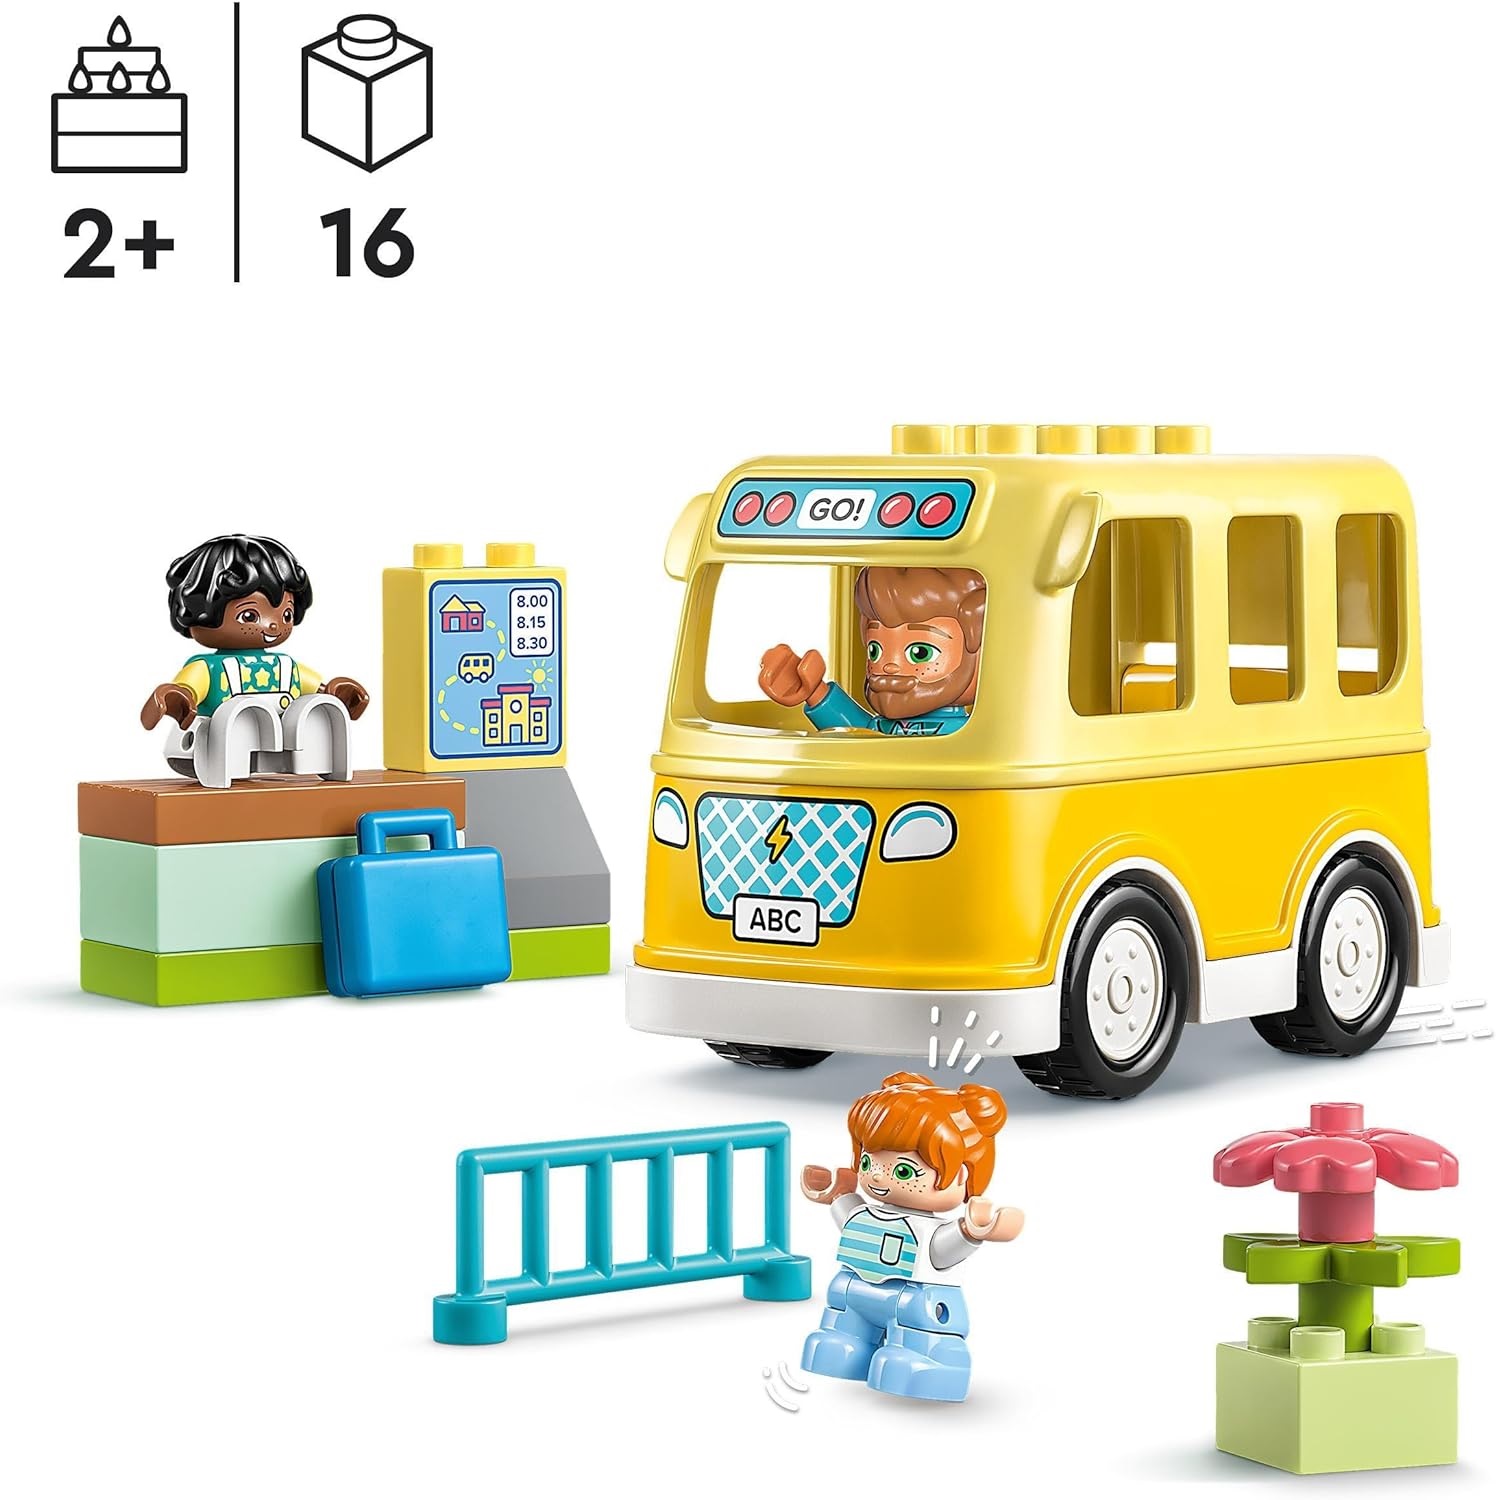 Lego Duplo 10988 Поездка на автобусе